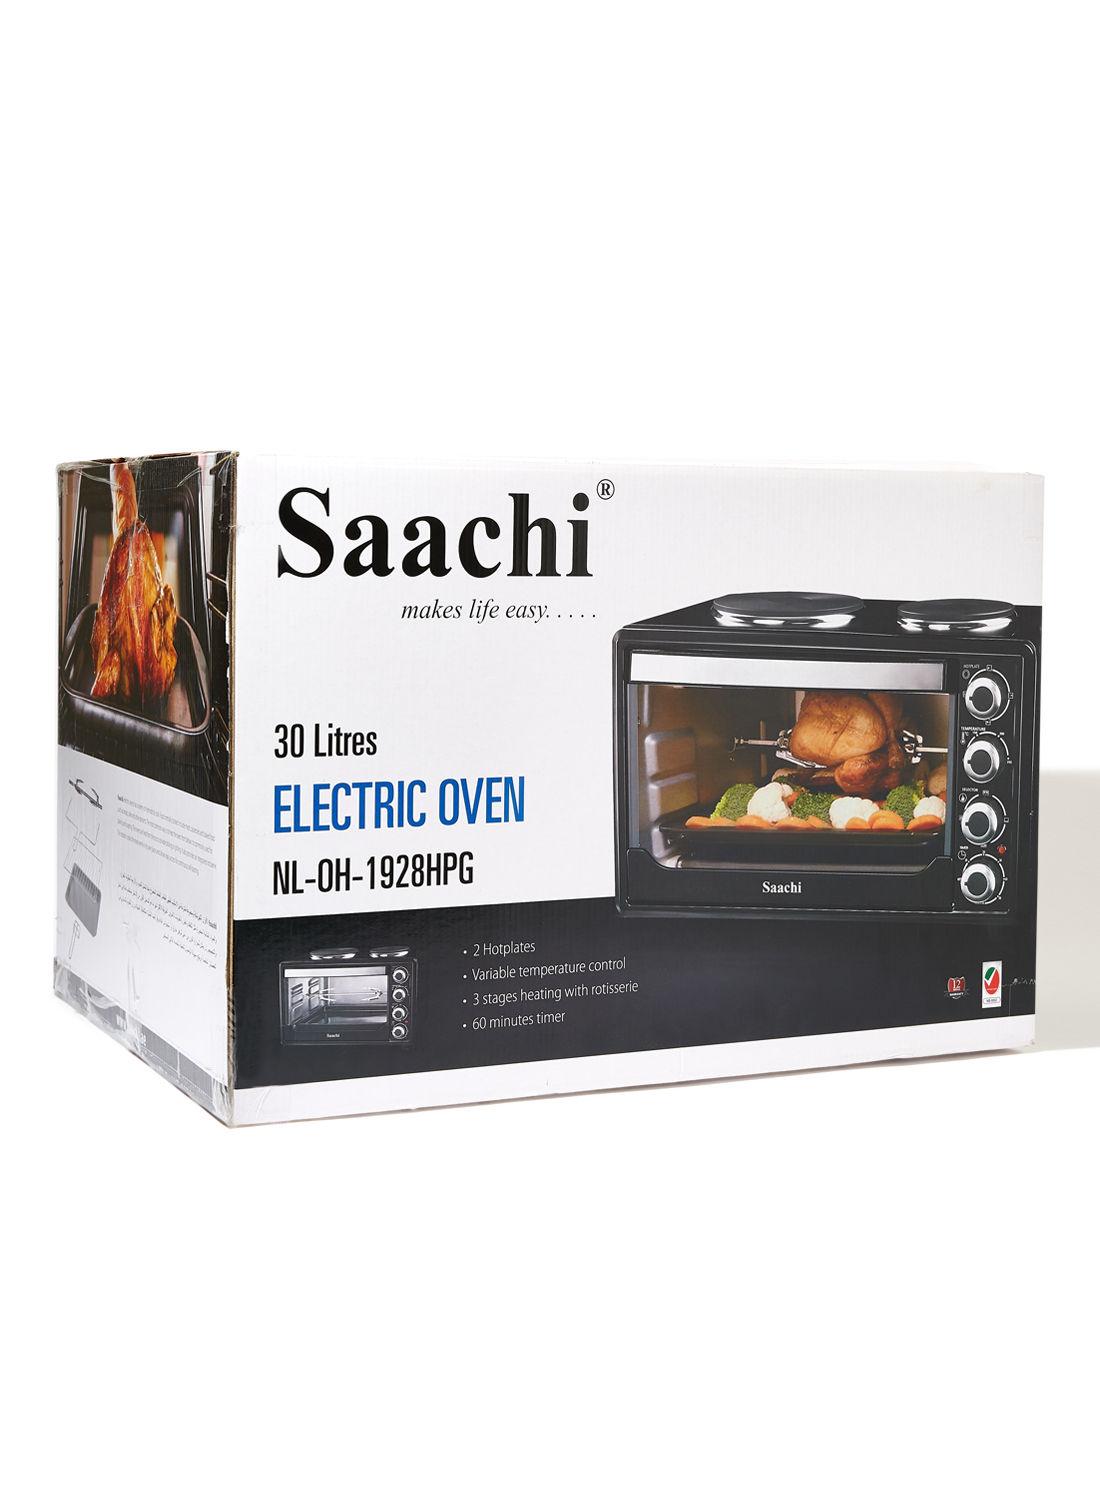 فرن كهربائي مزود بألواح تسخين Saachi - Electric Oven With Hotplates  - cG9zdDoyNTA3MDY=